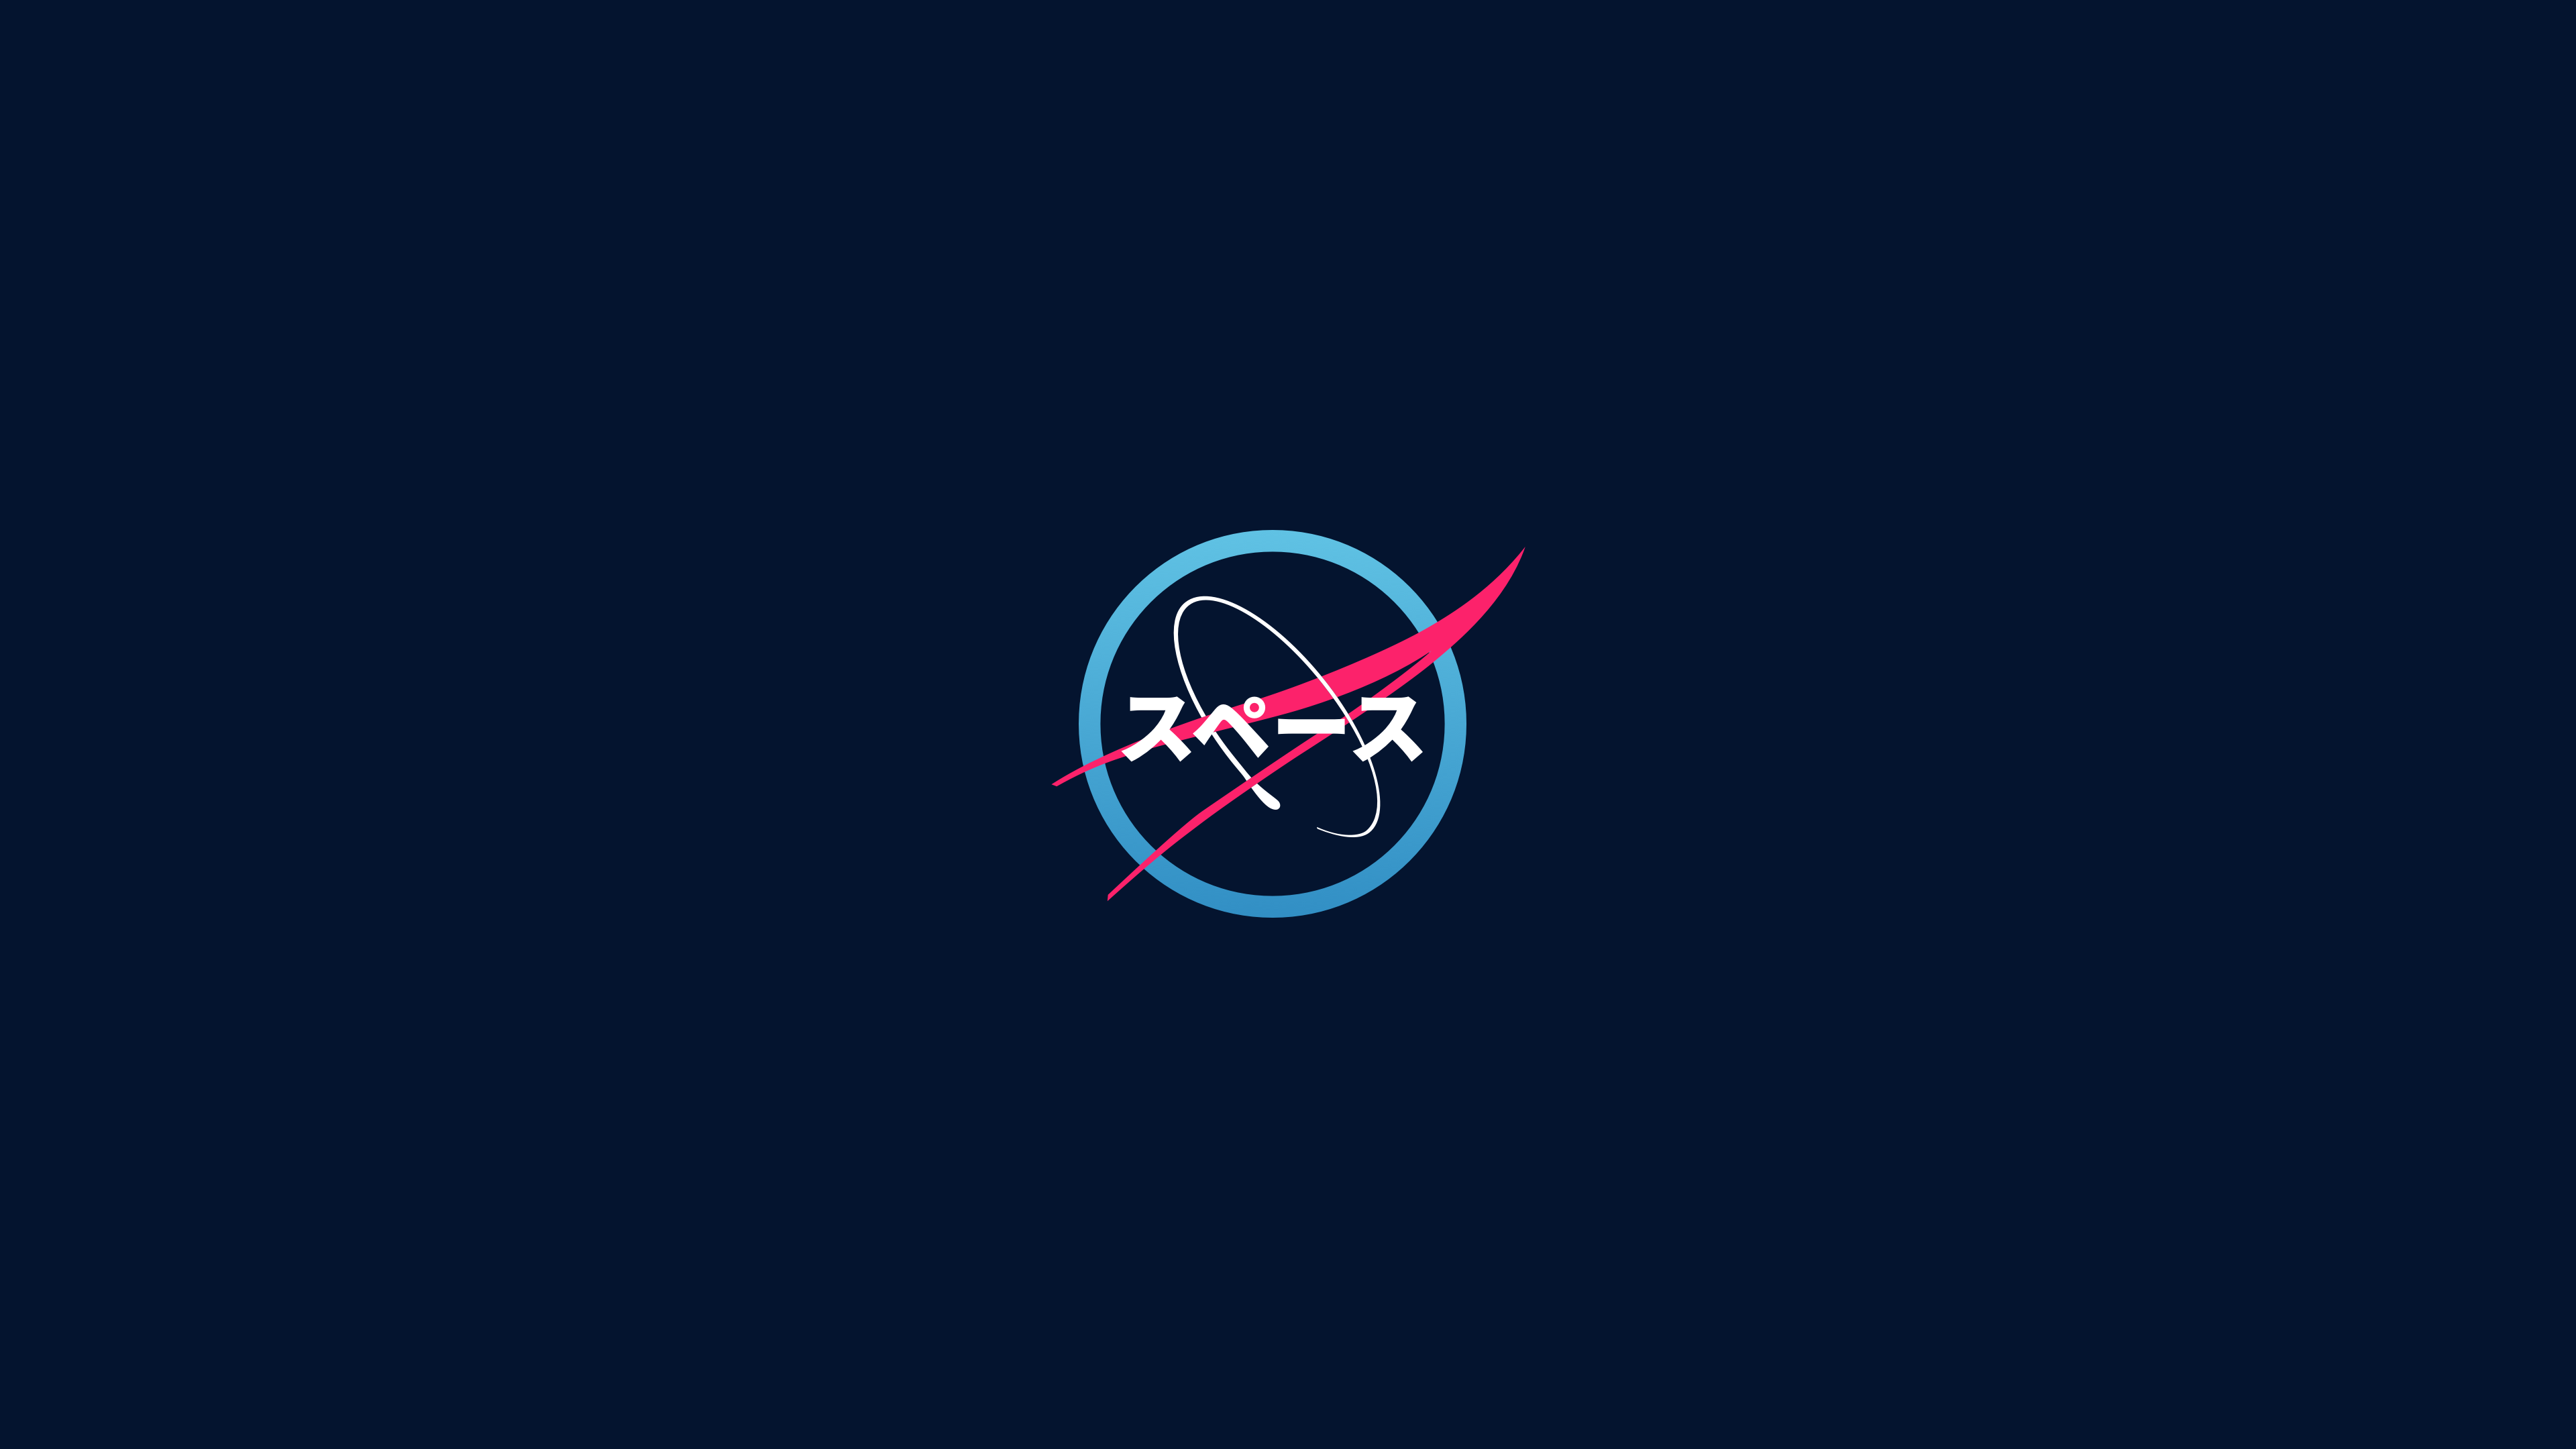 General 3840x2160 NASA logo minimalism modern simple background digital art